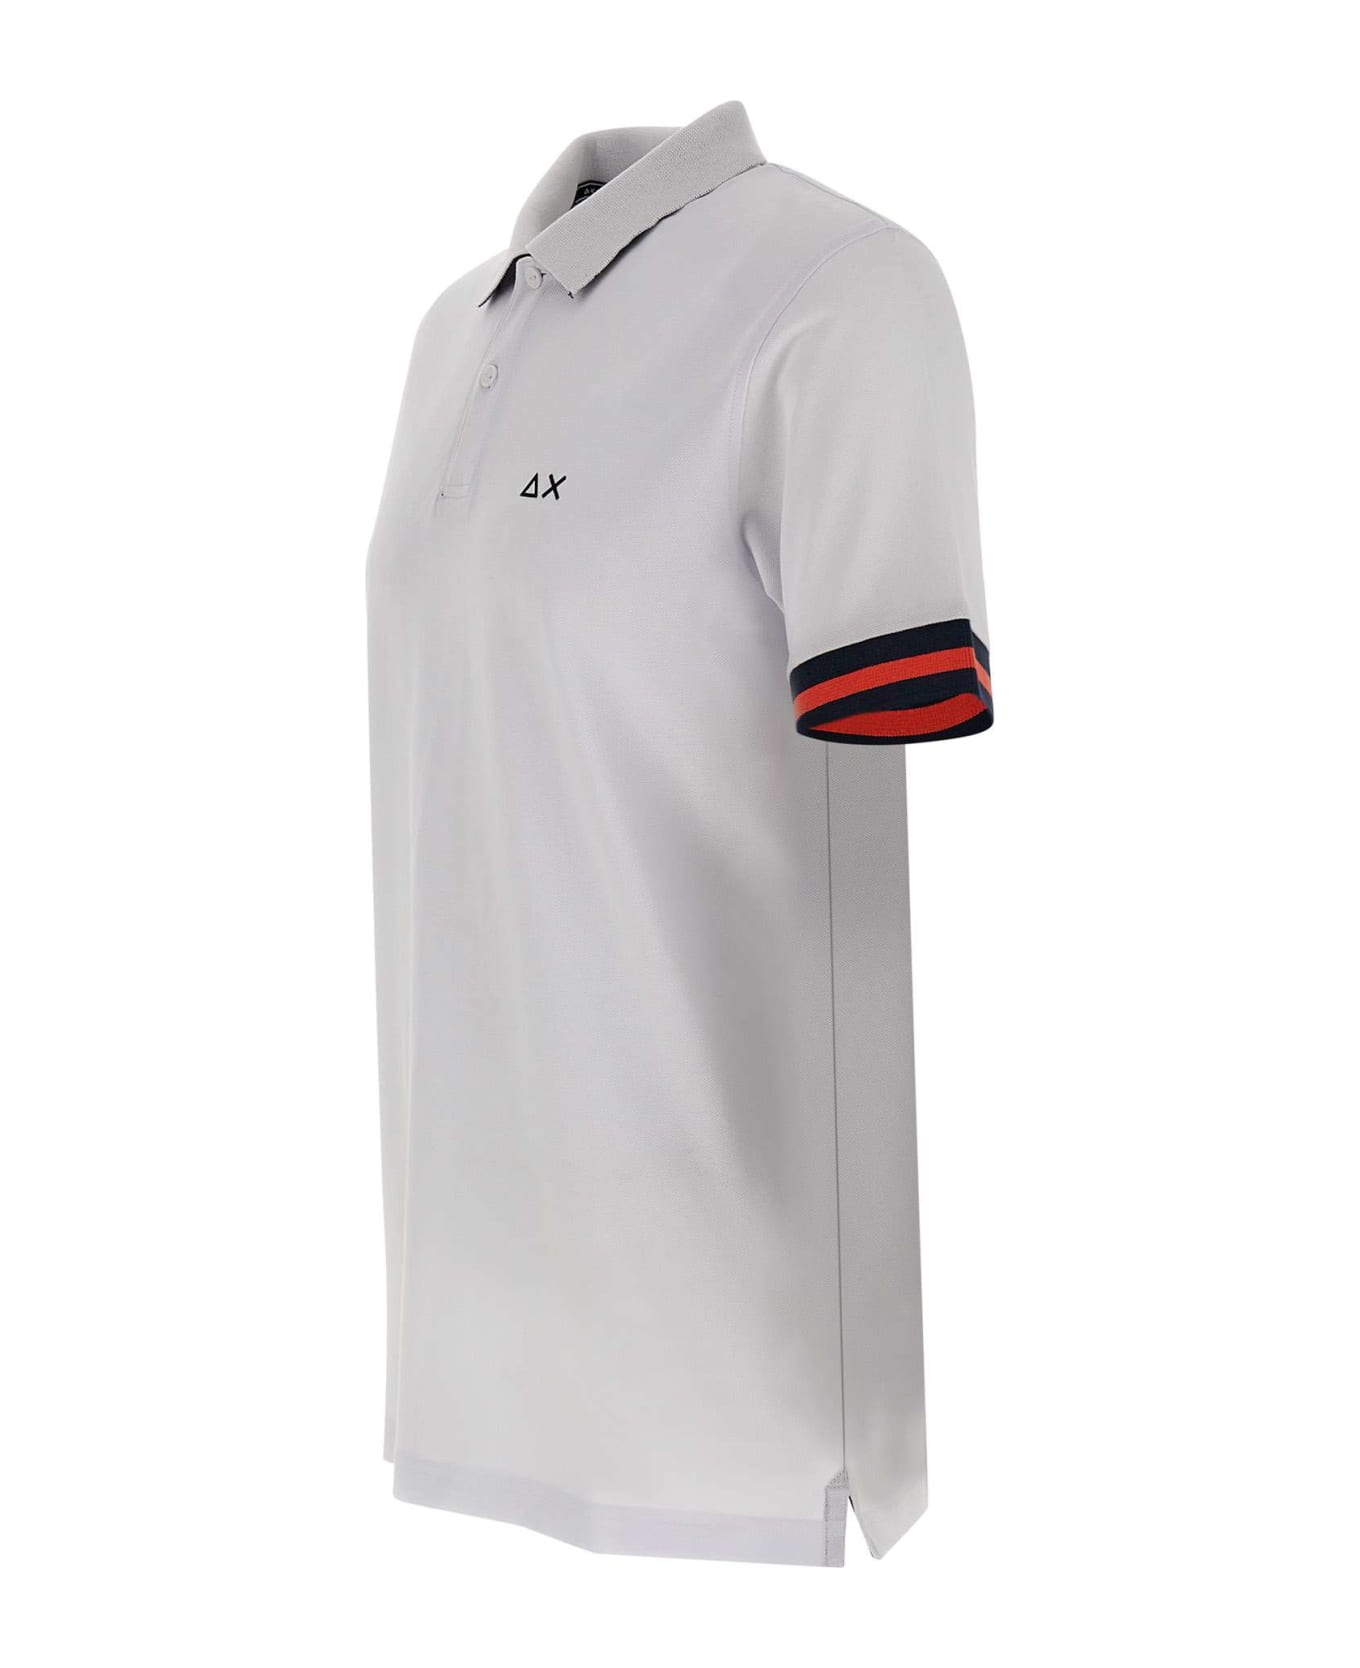 Sun 68 'stripes' Cotton Polo Shirt ポロシャツ